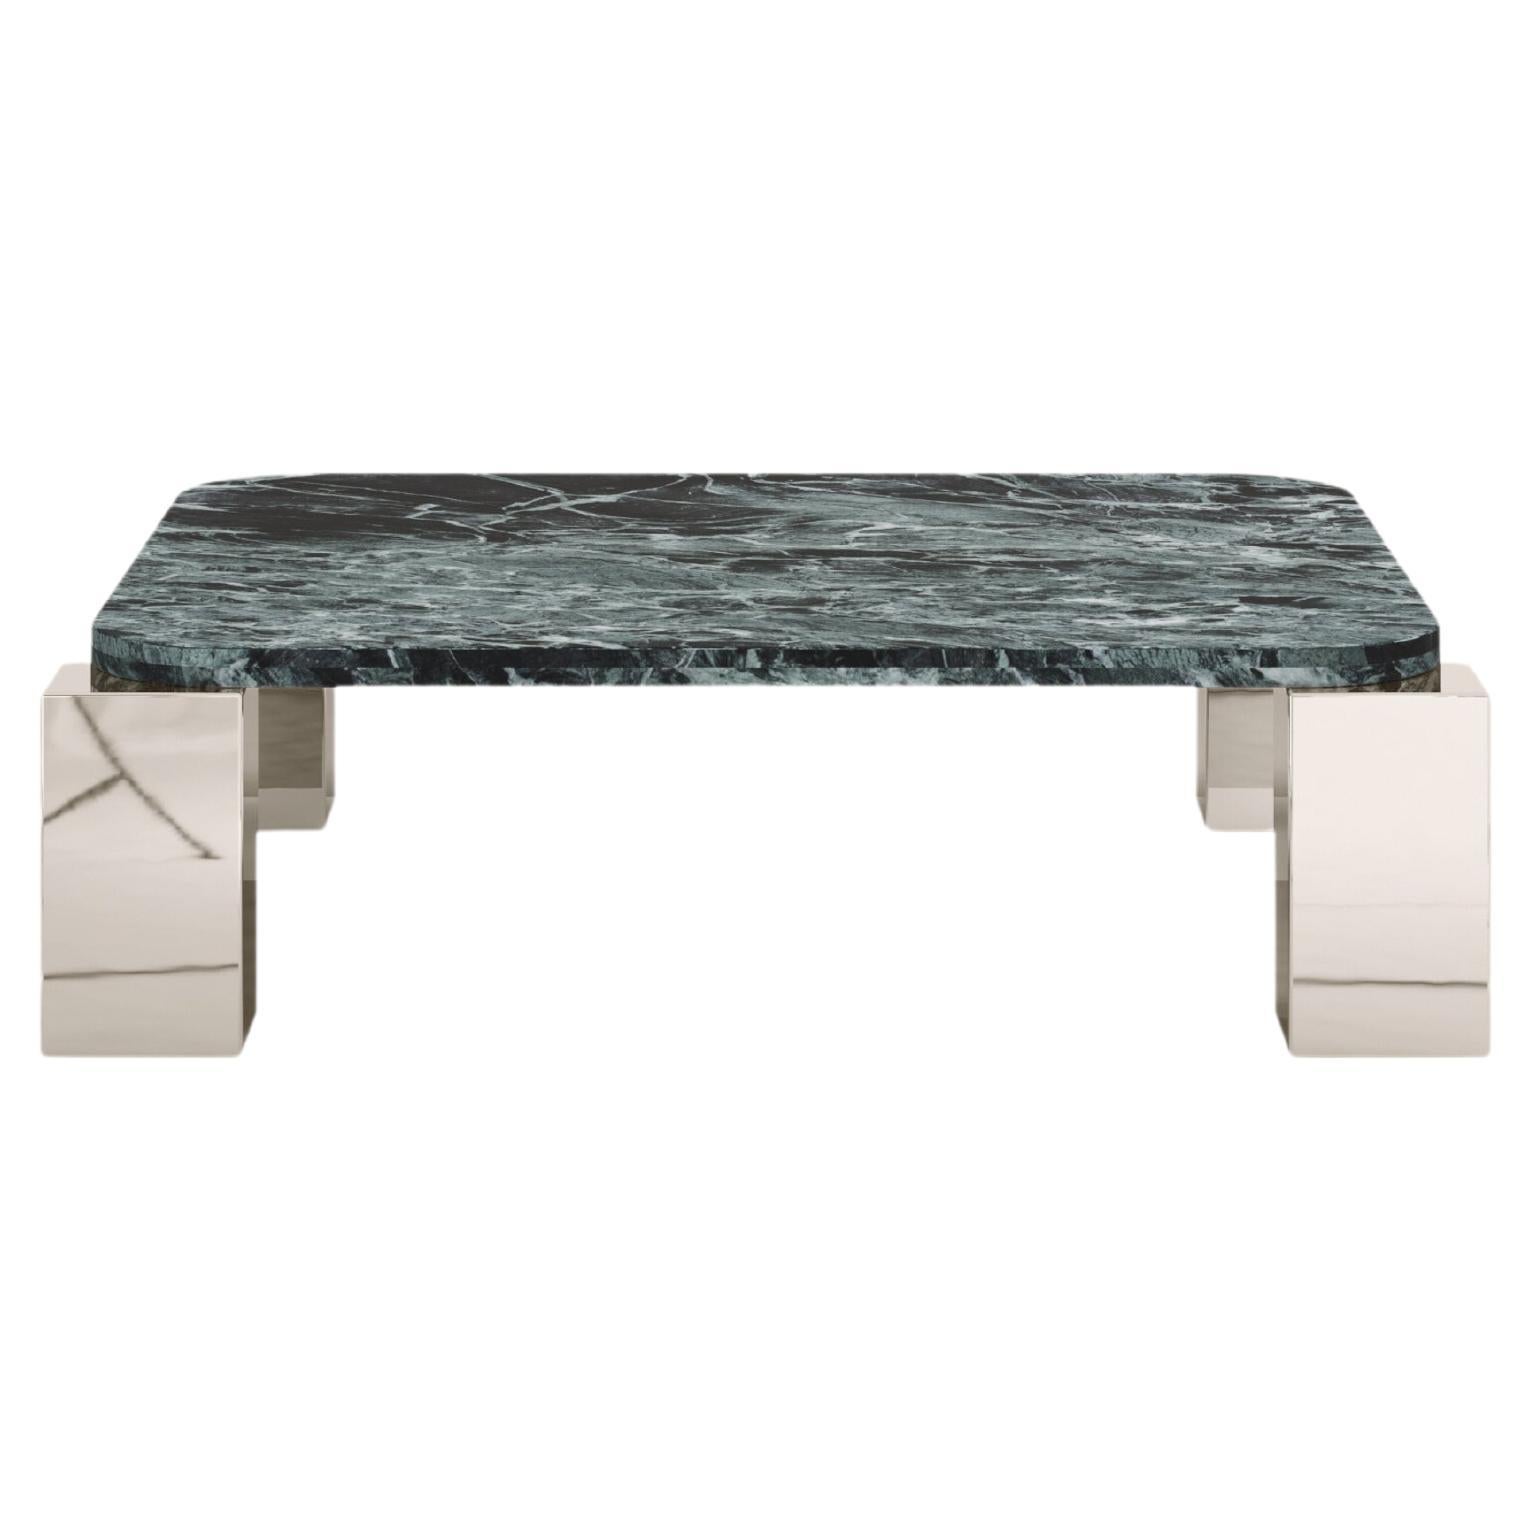 FORM(LA) Cubo Square Coffee Table 50”L x 50"W x 14”H Verde Alpi Marble & Chrome For Sale